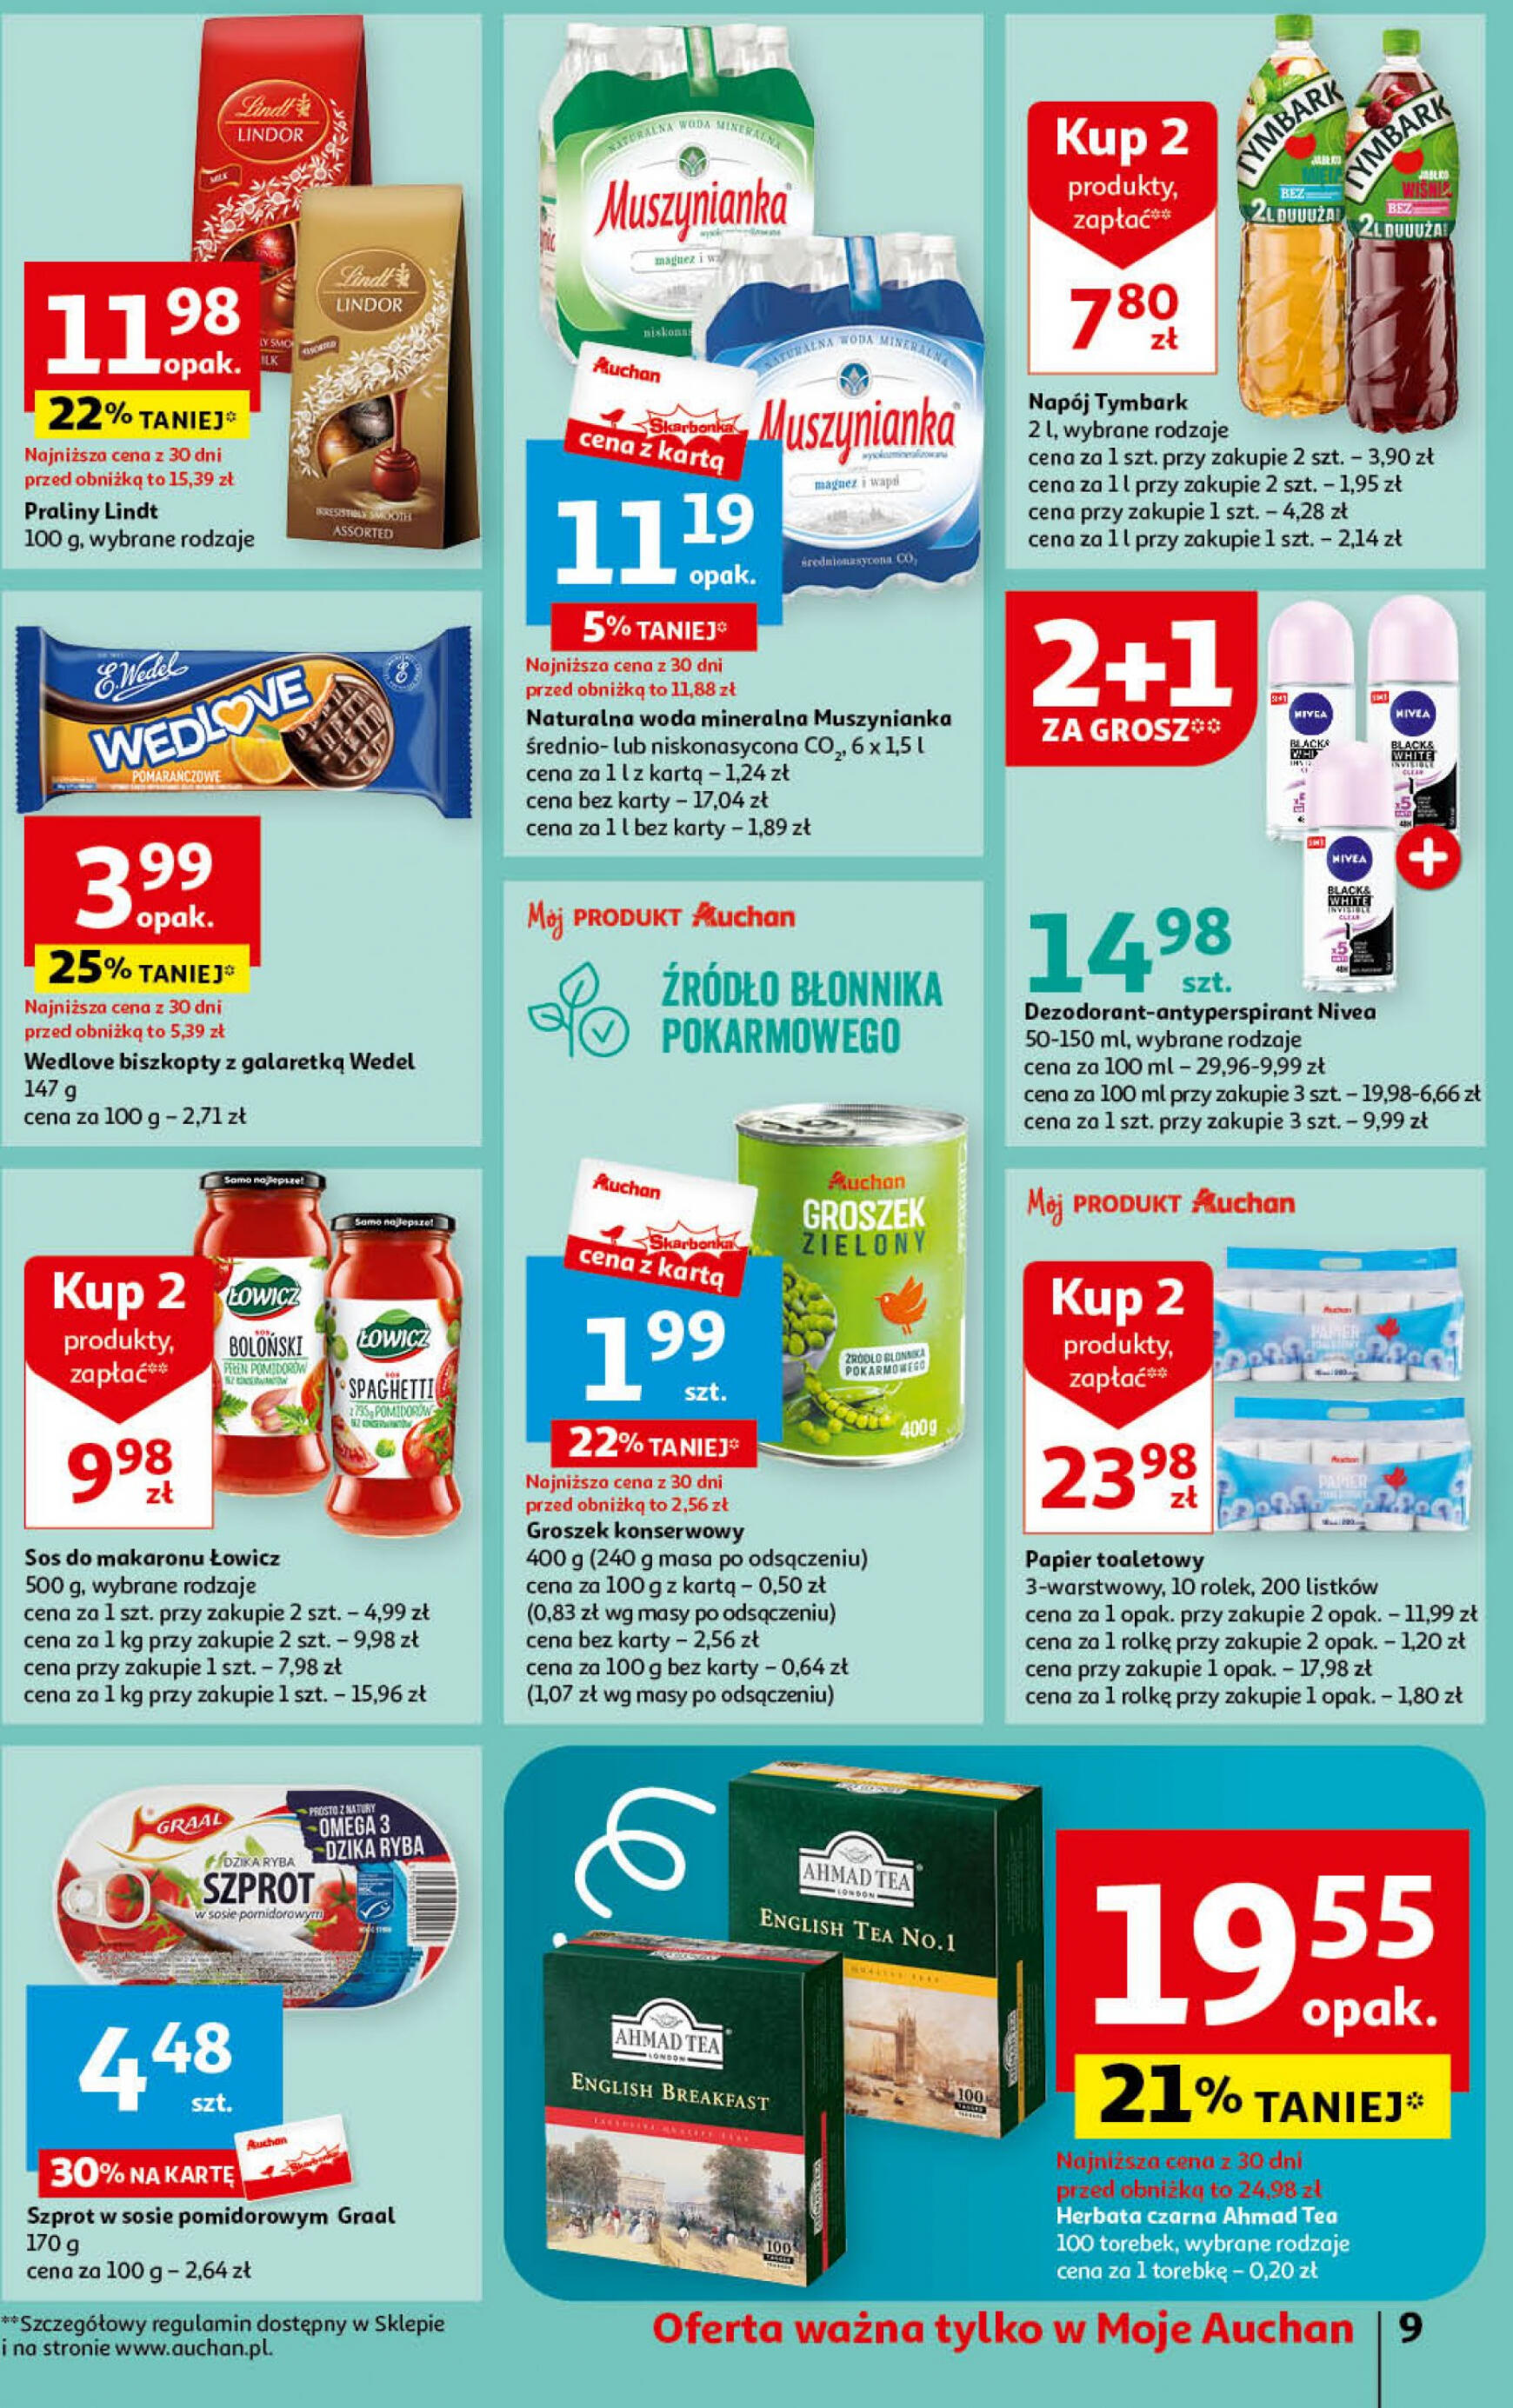 auchan - Moje Auchan gazetka aktualna ważna od 16.05. - 22.05. - page: 9